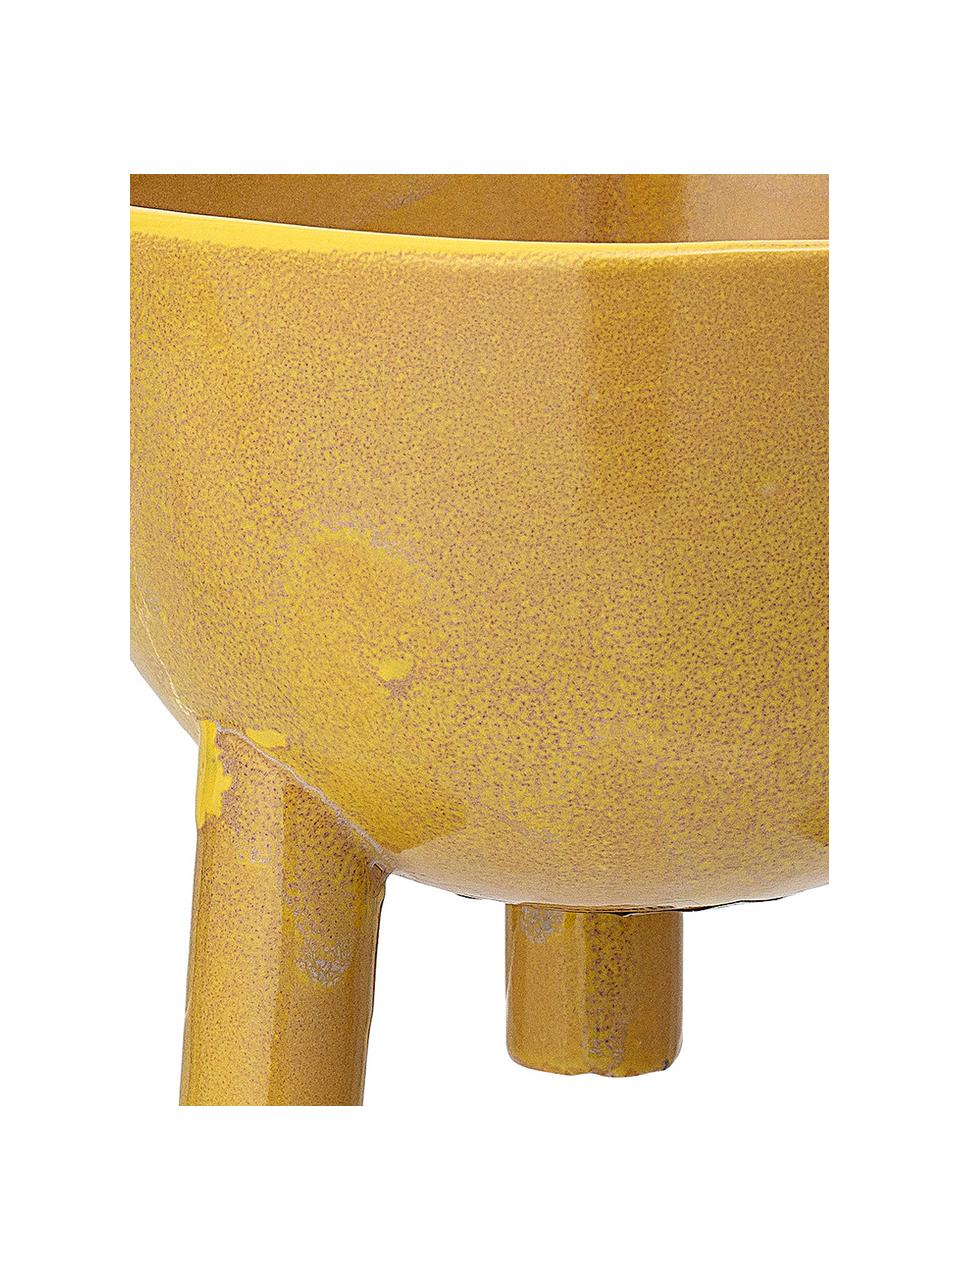 Petit cache-pot jaune Aaren, Grès cérame, Jaune, Ø 15 x haut. 12 cm